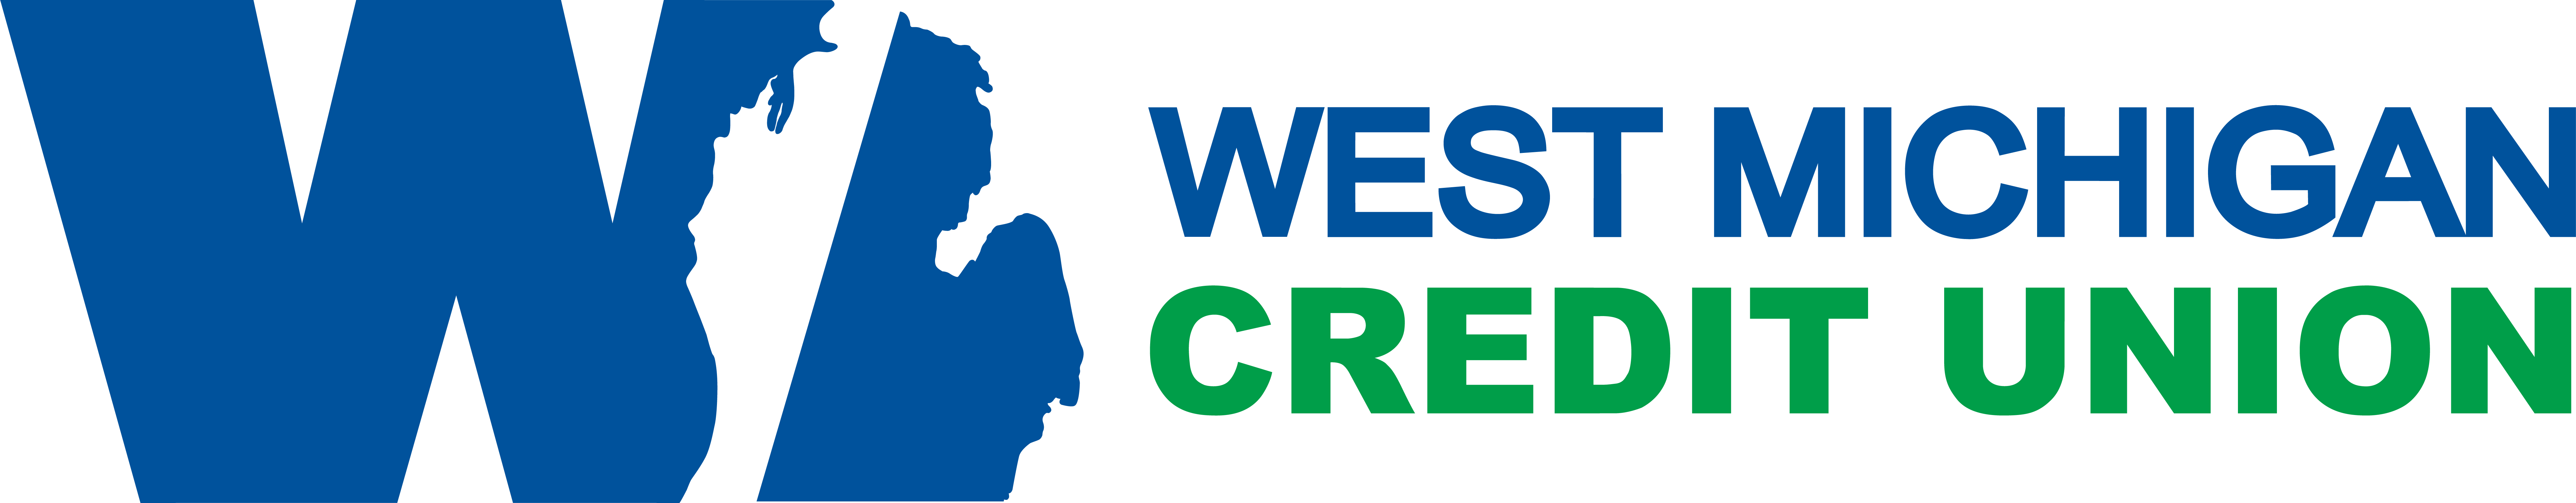 West Michigan Credit Union